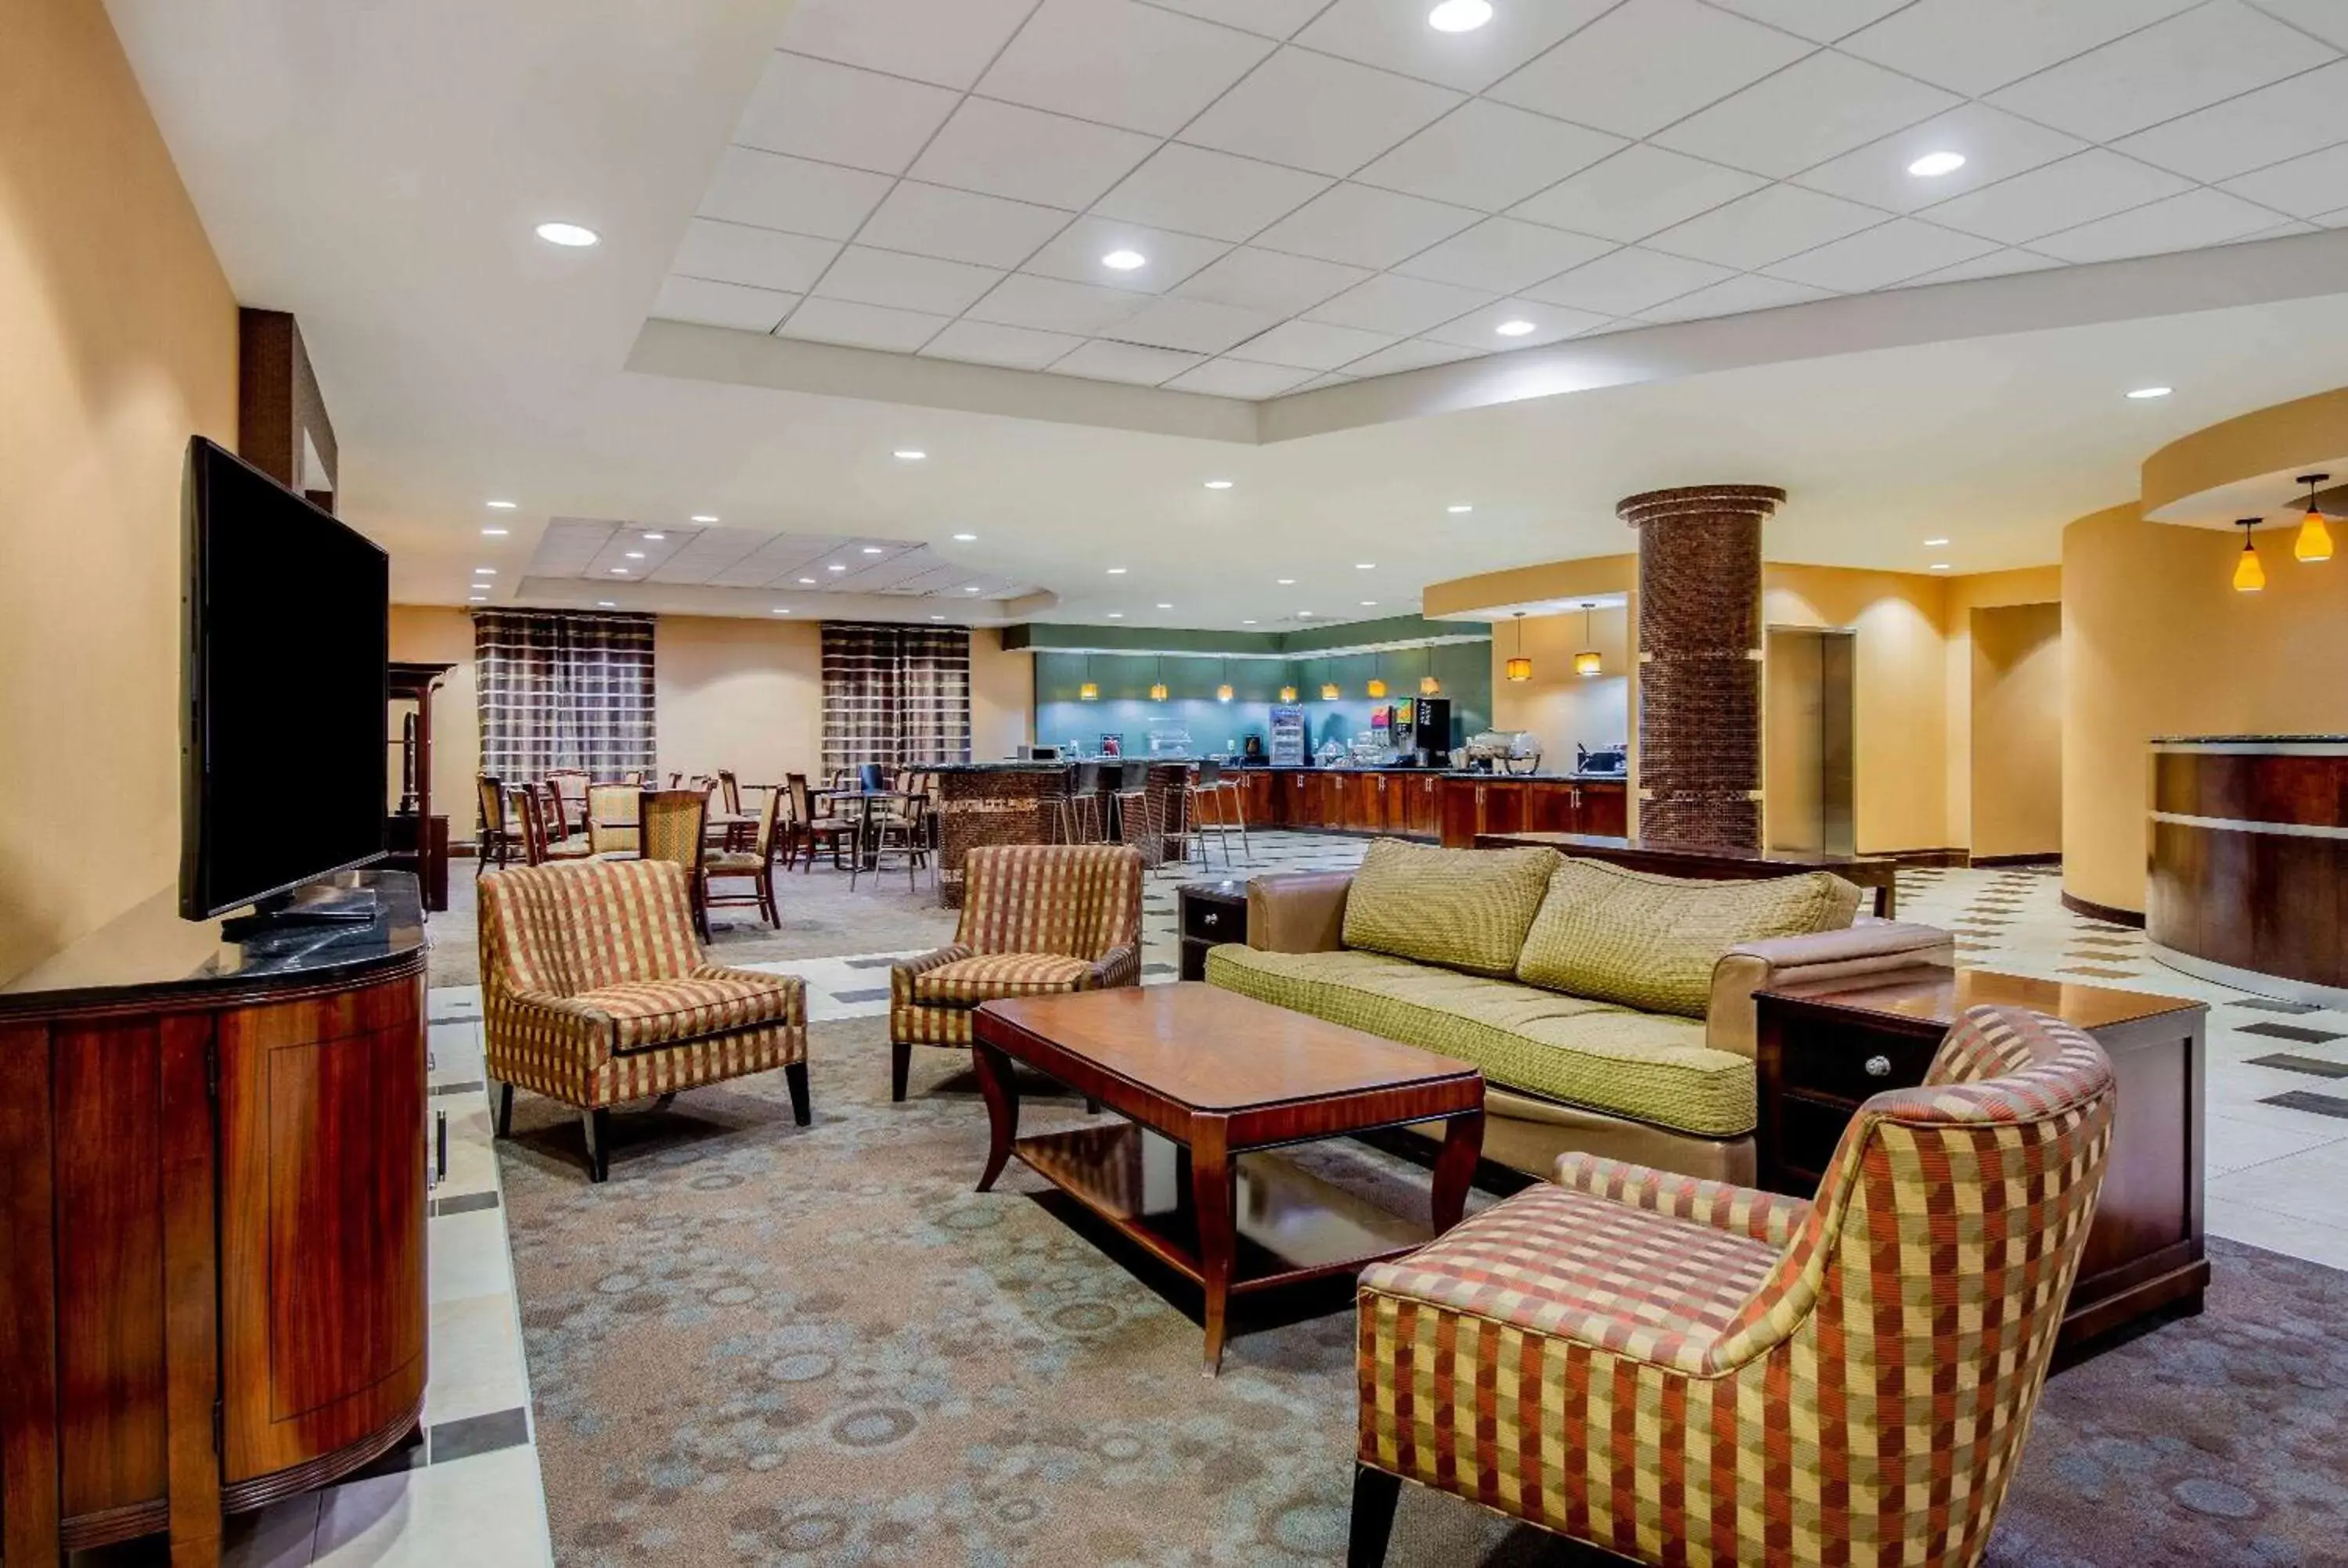 Lobby or reception in La Quinta Inn & Suites Bel Air